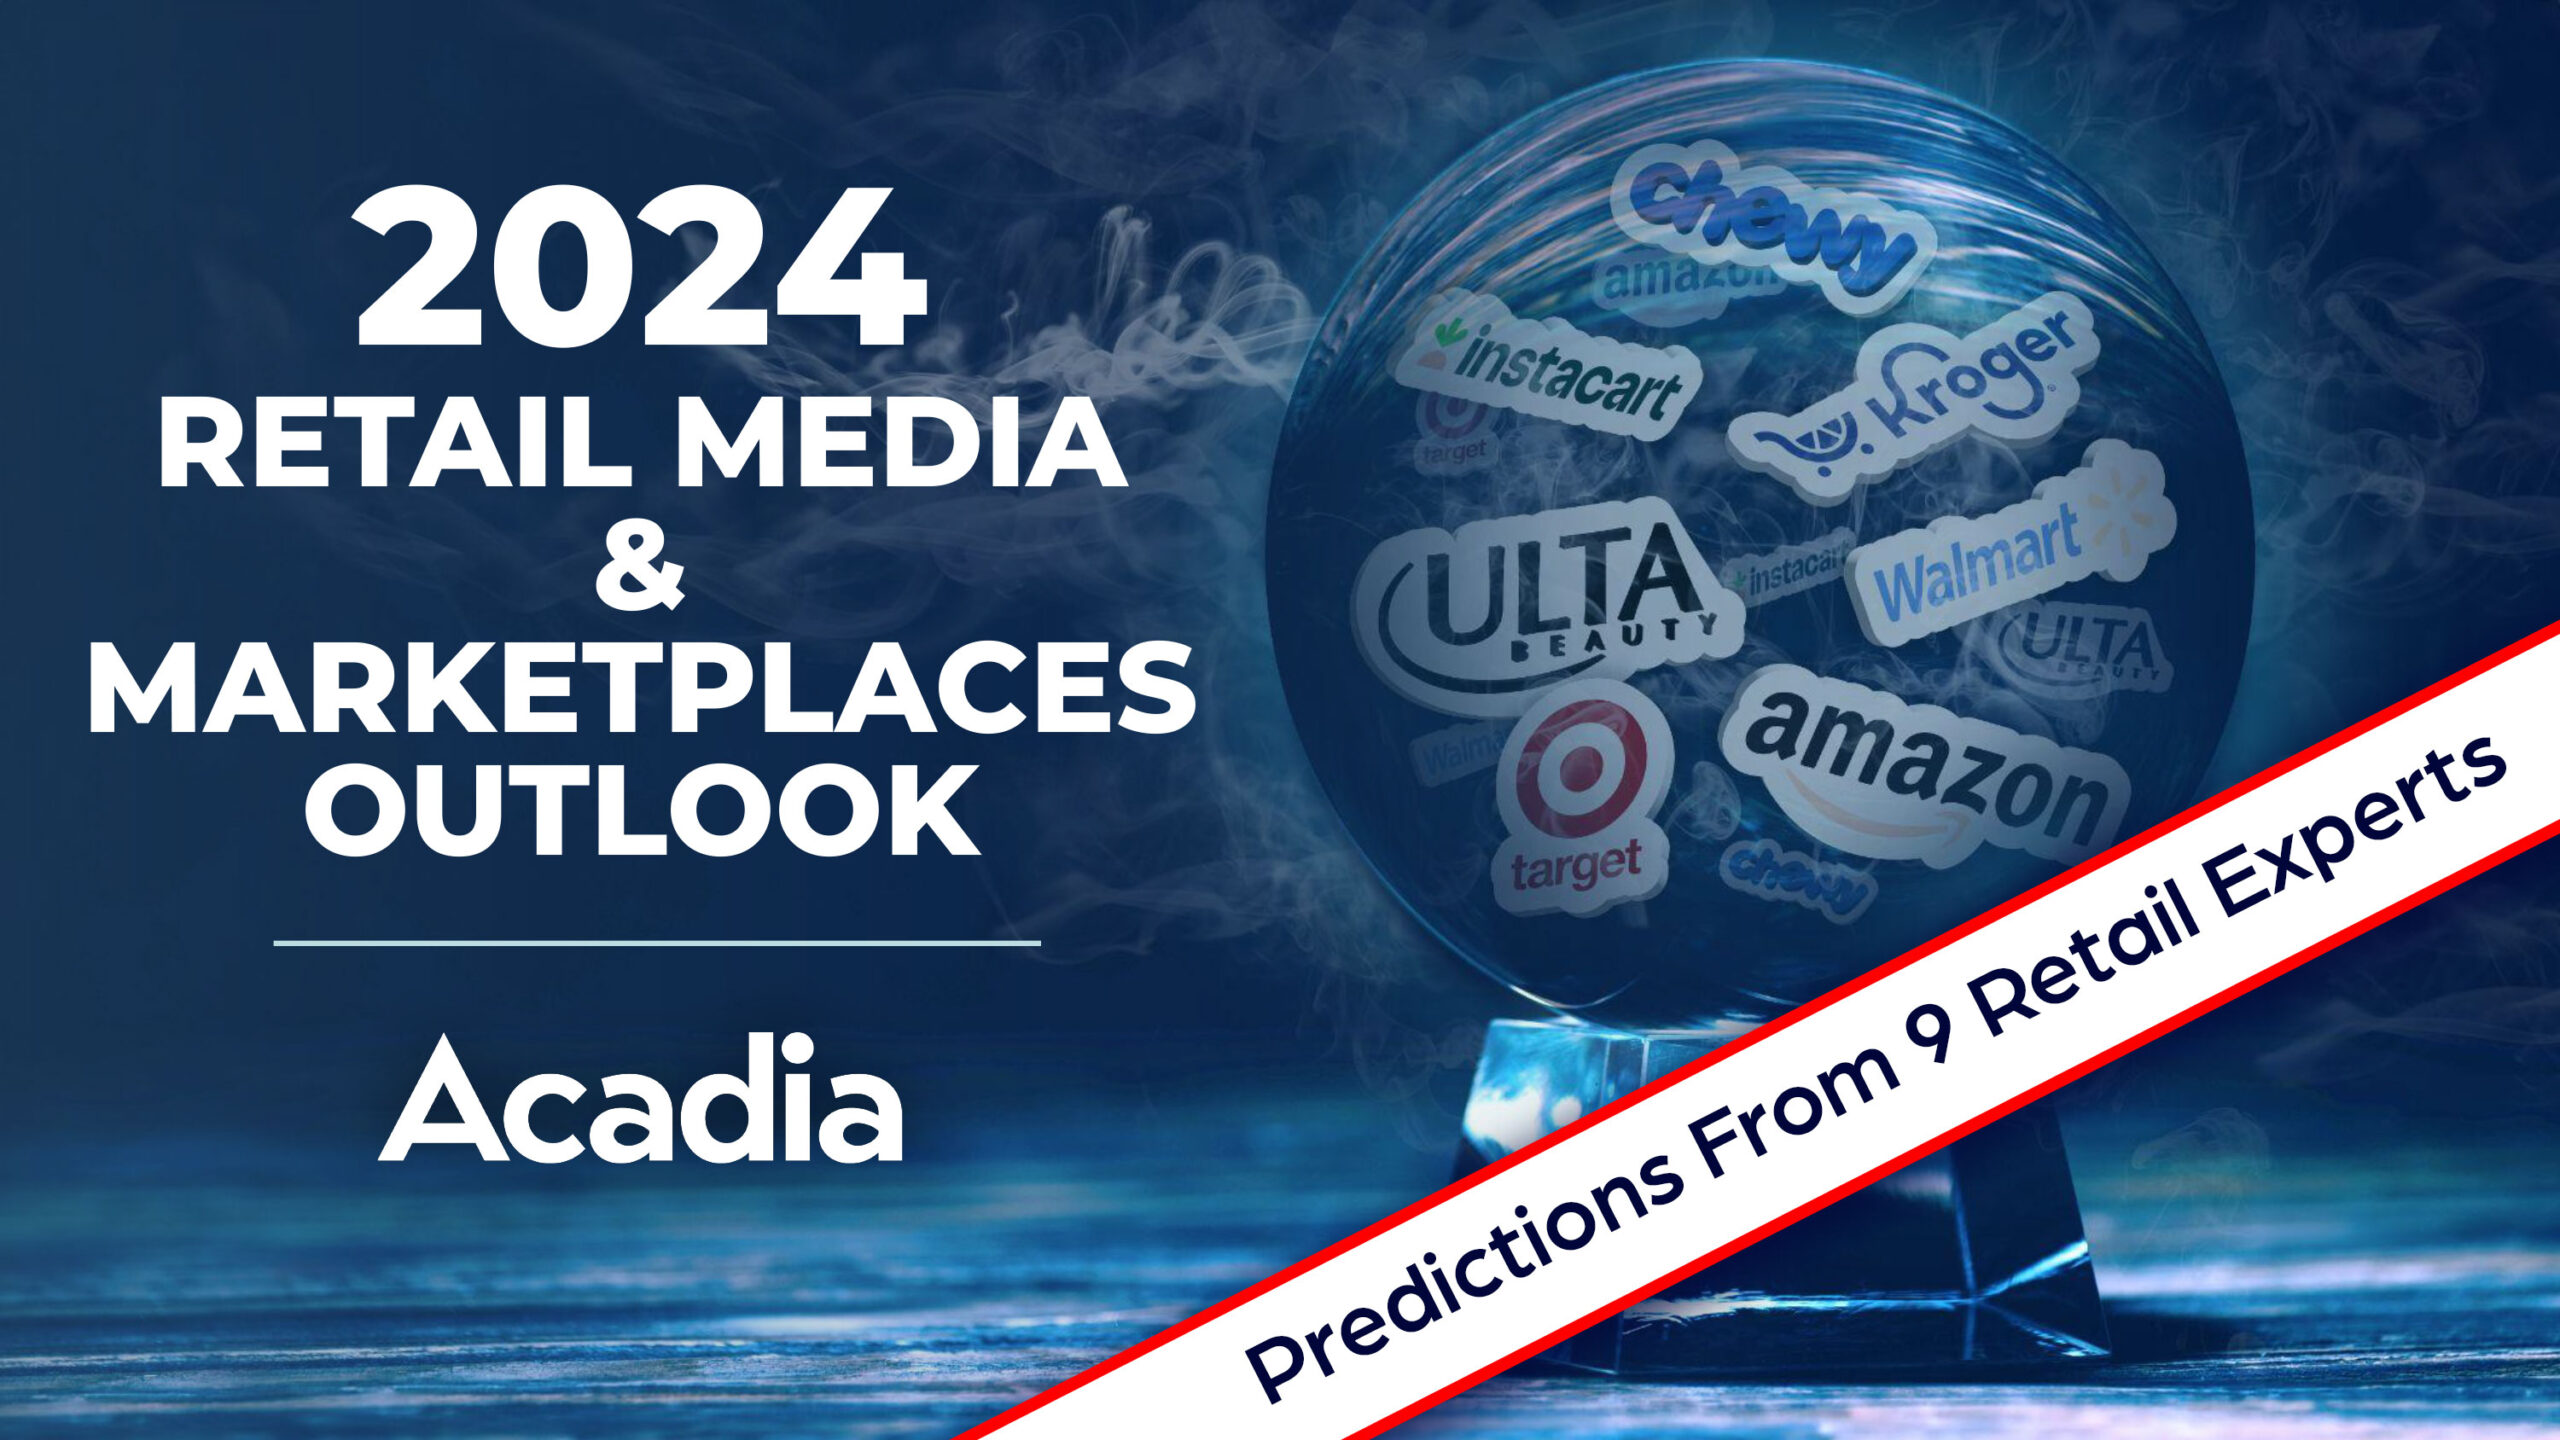 Acadia_2024-retail-media-&-marketplaces-outlook_Teaser_Image